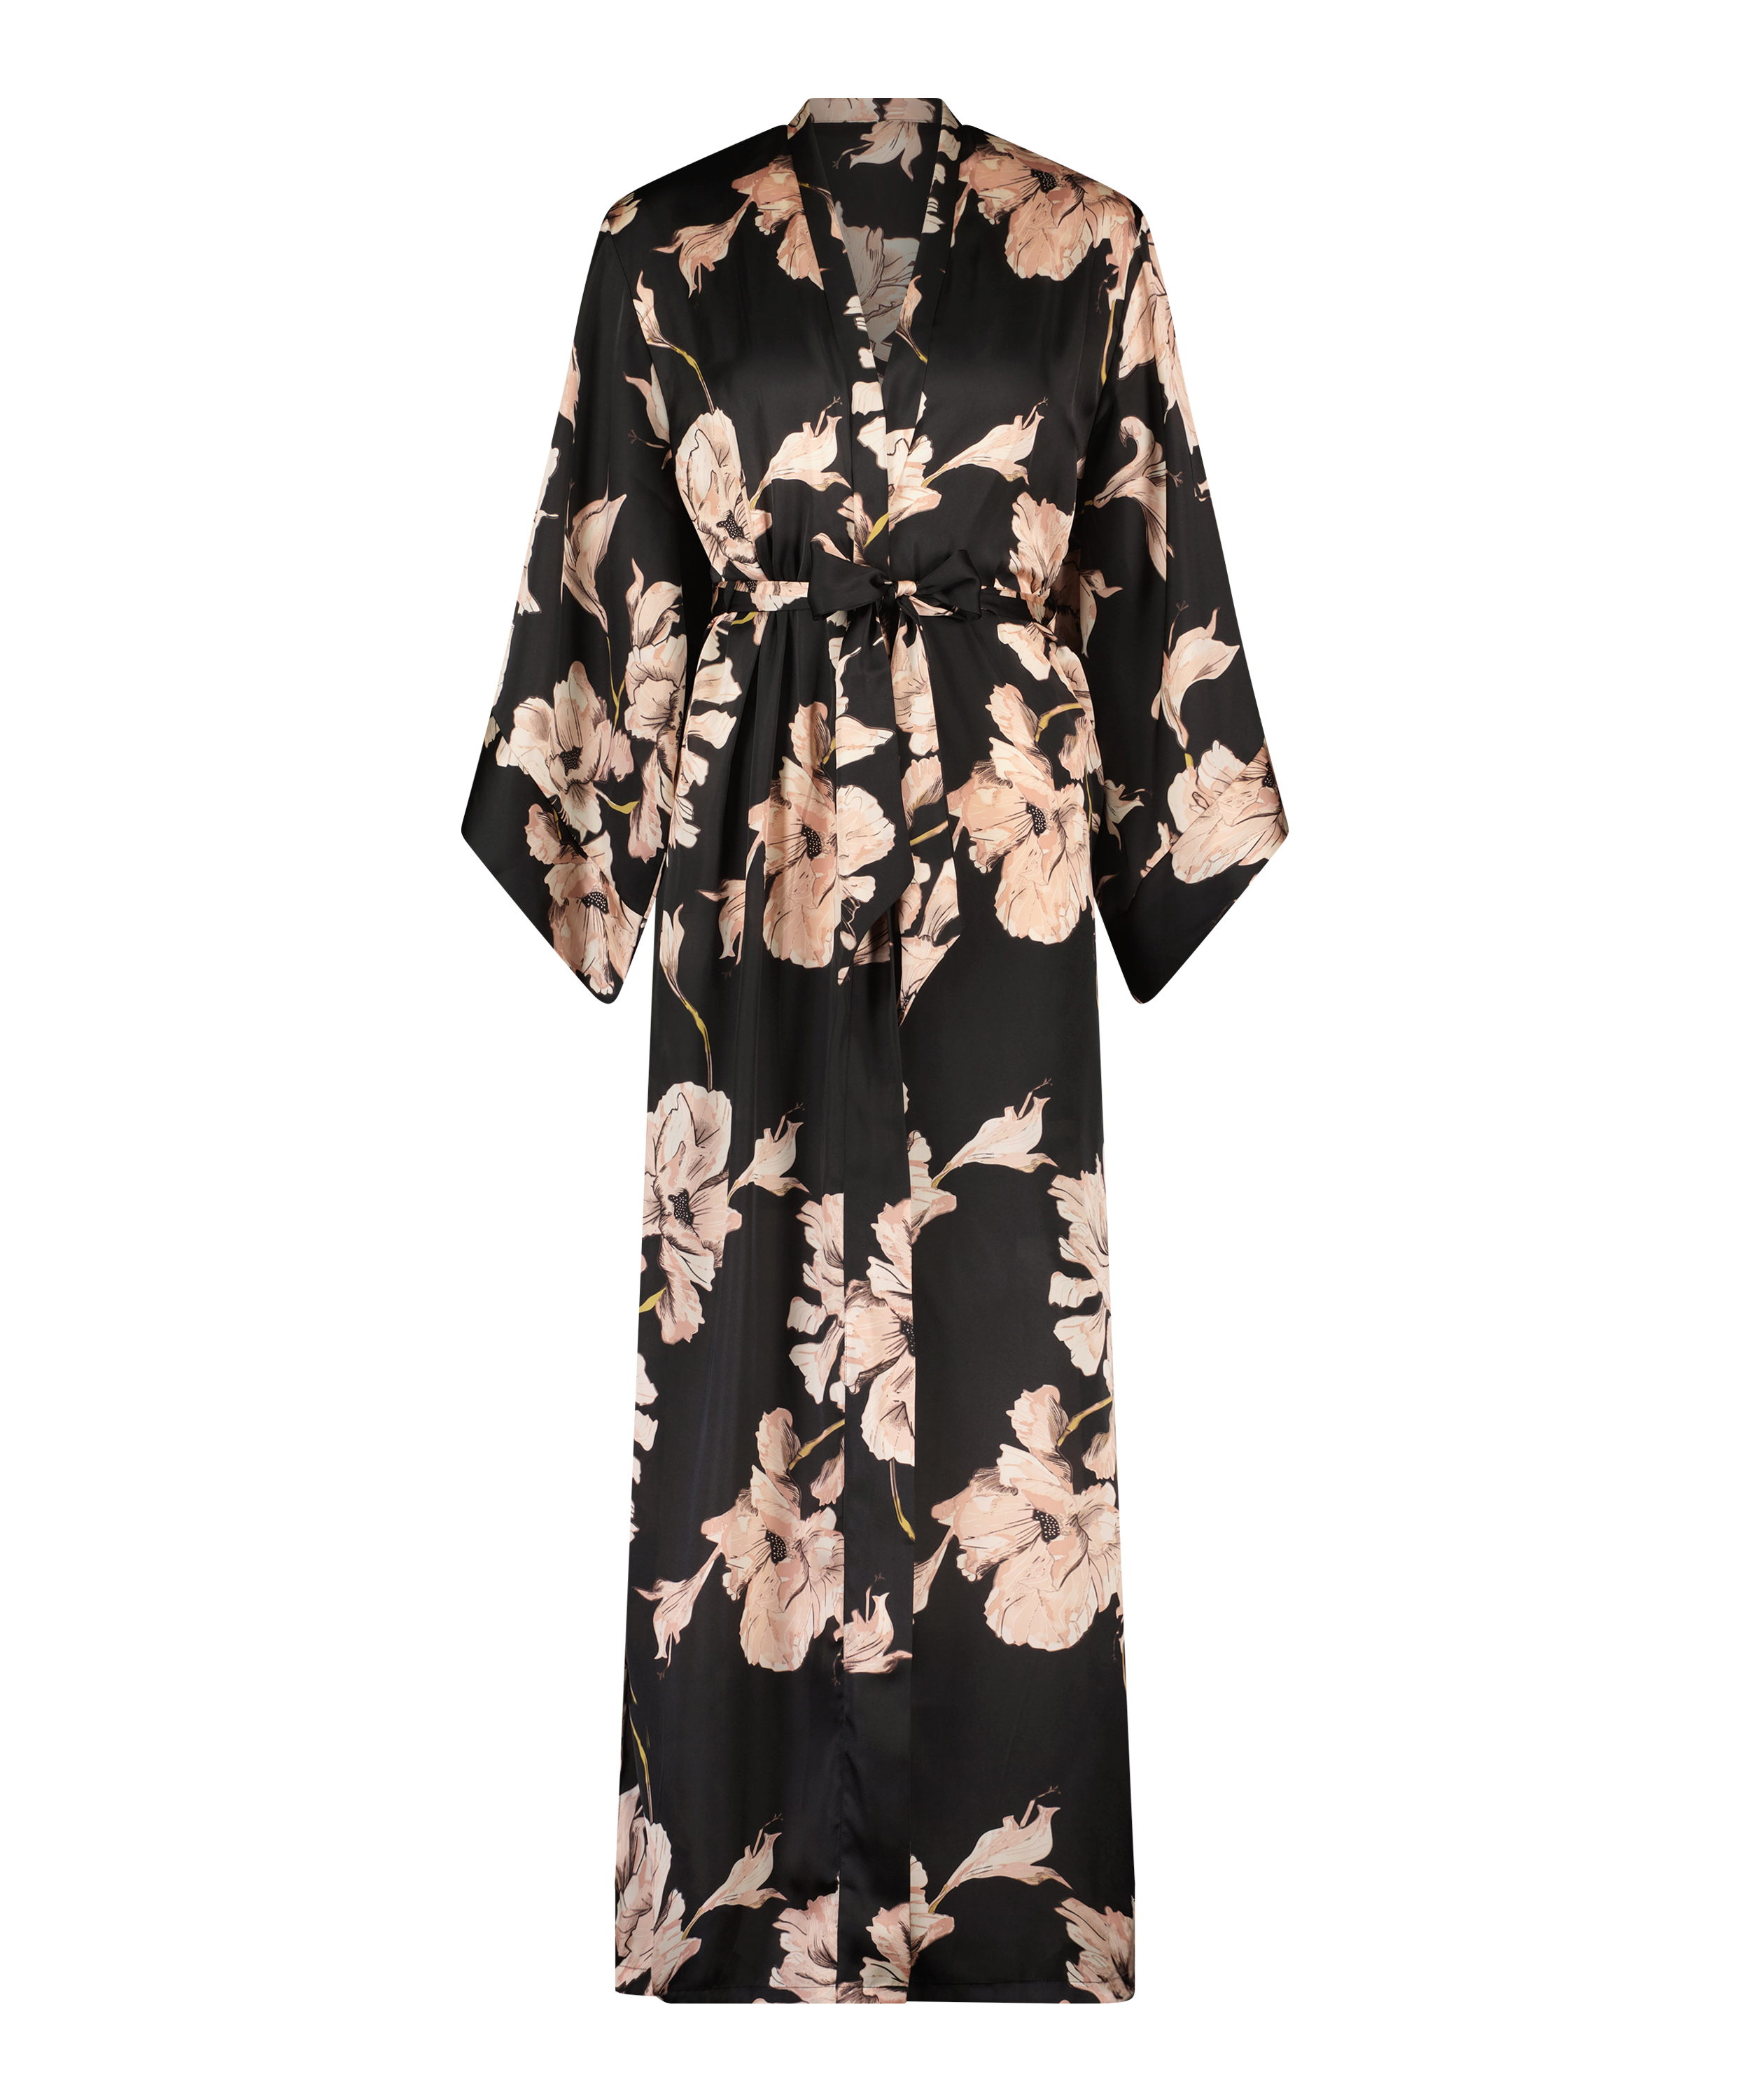 Bloom Satin Kimono for €59.99 - All Nightwear - Hunkemöller